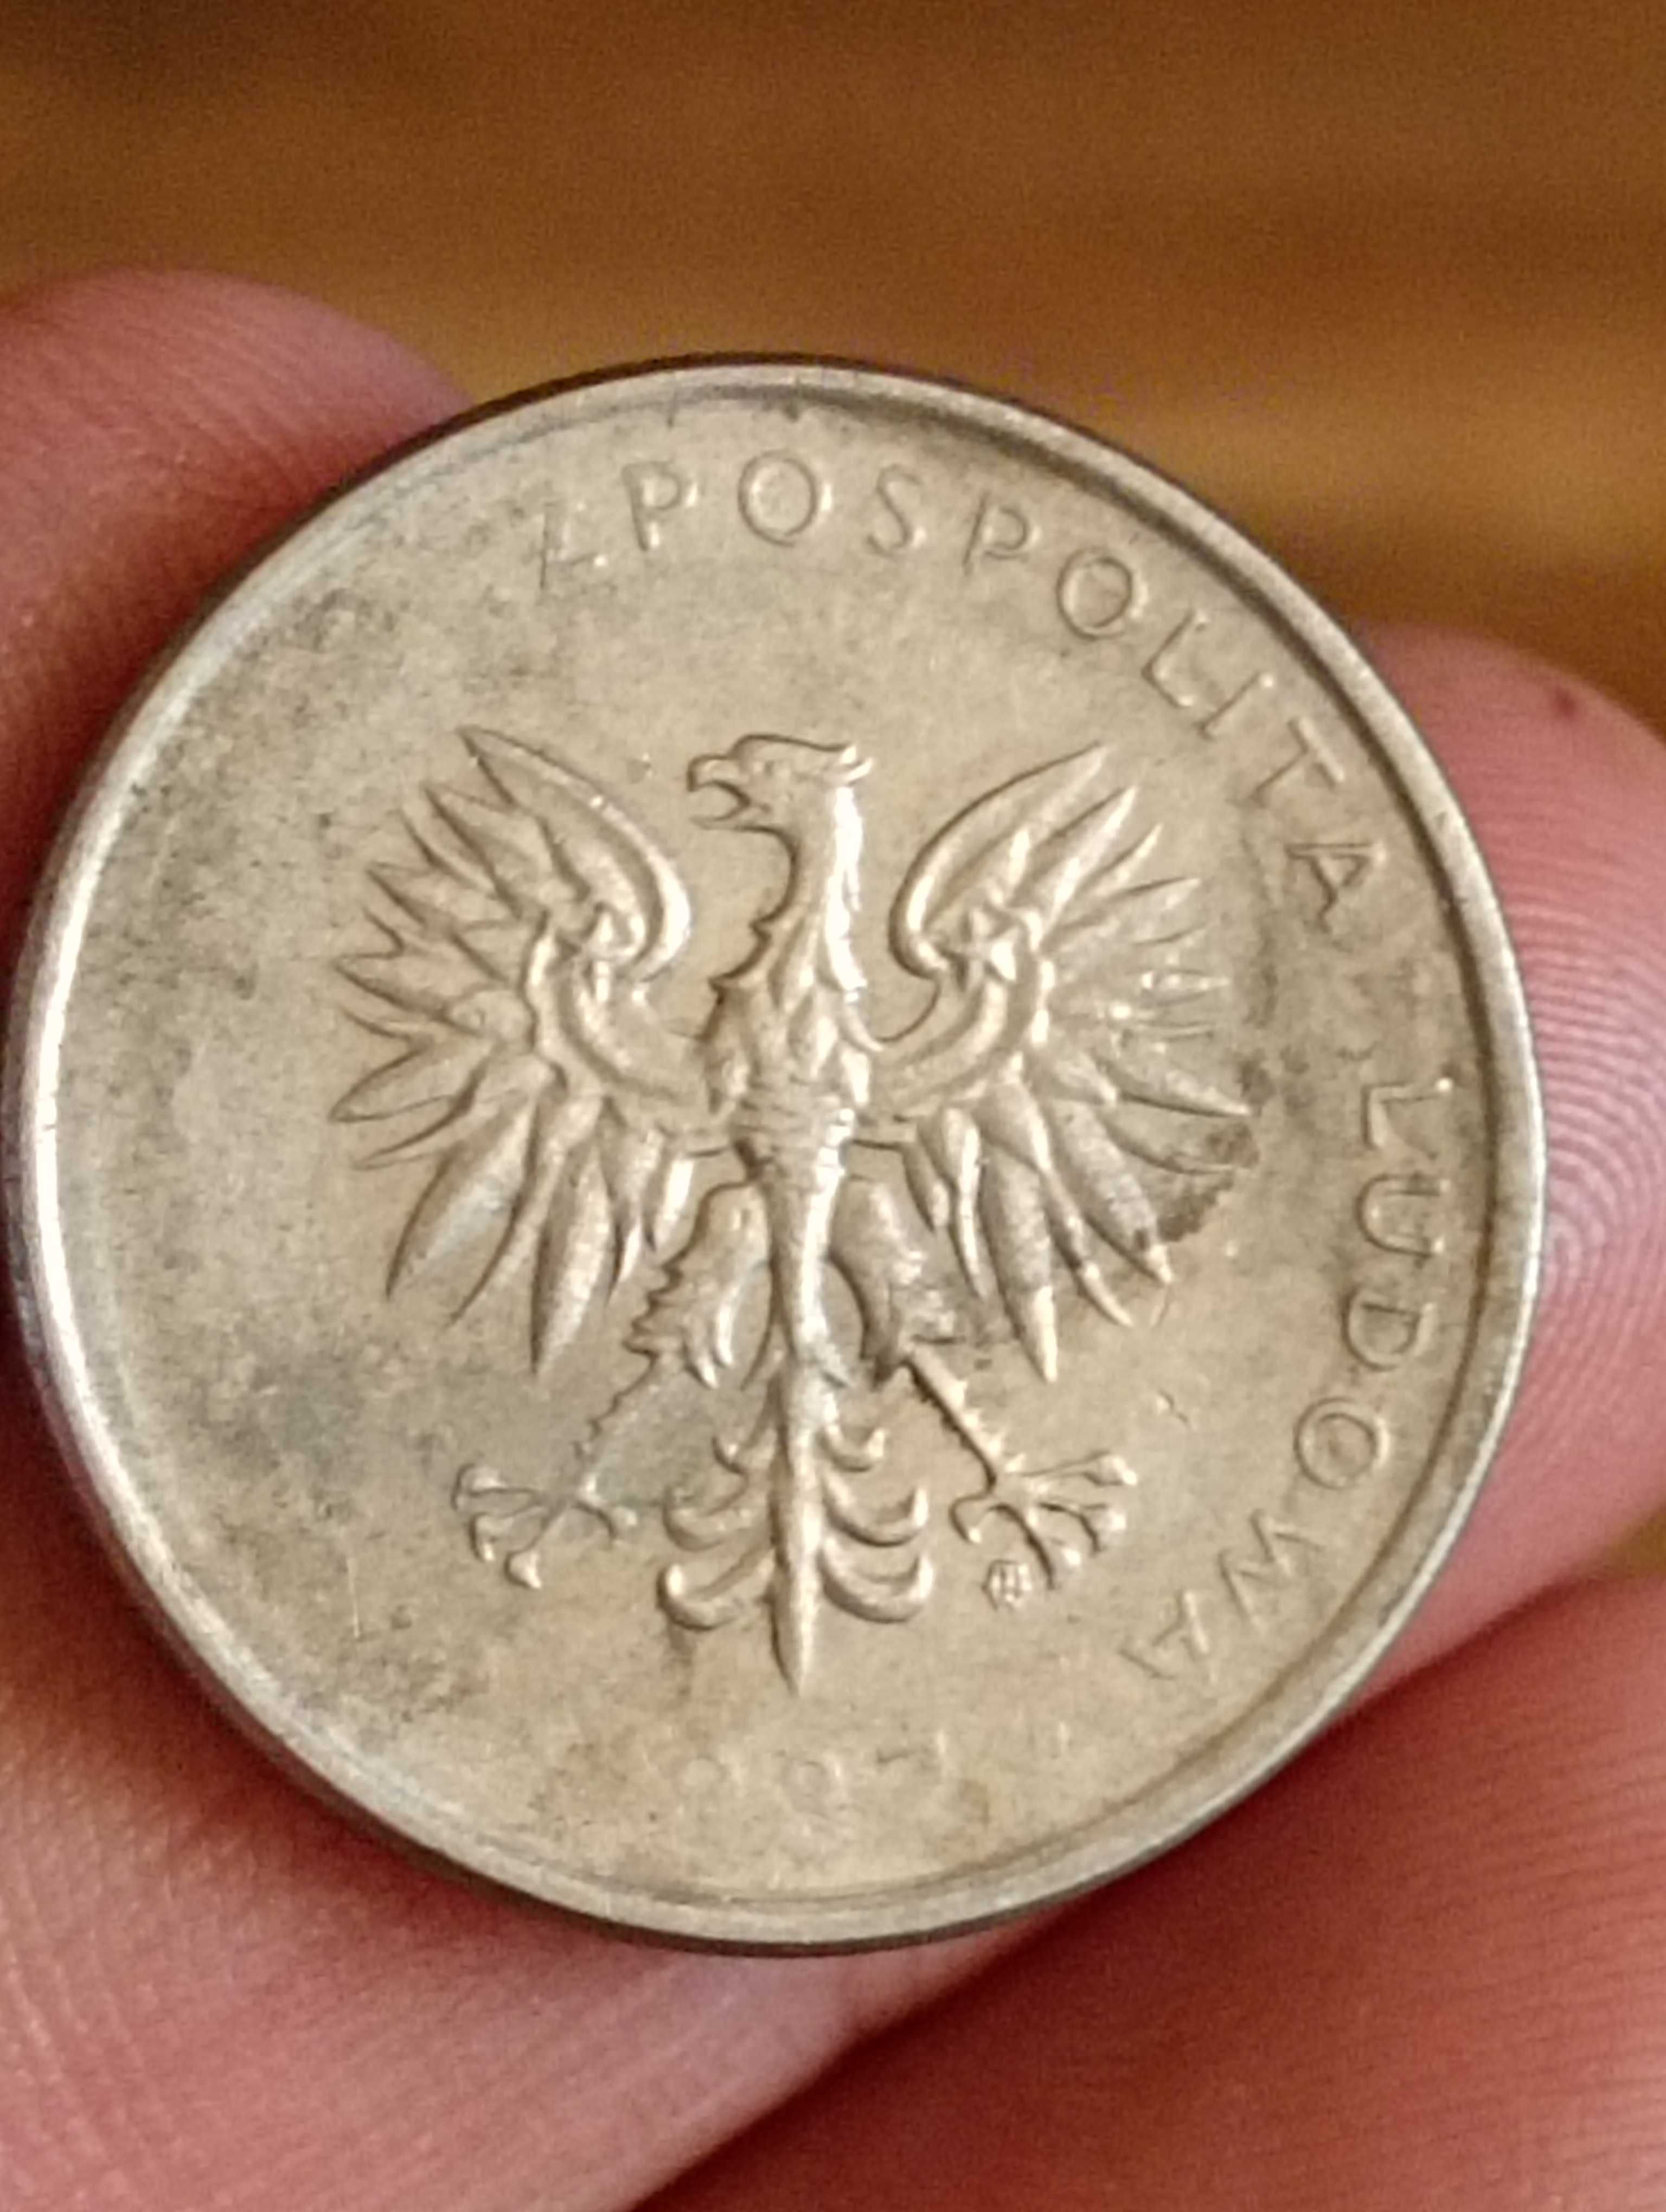 Sprzedam monete 10 zl 1987 r zamazana data brak napisu  Polska